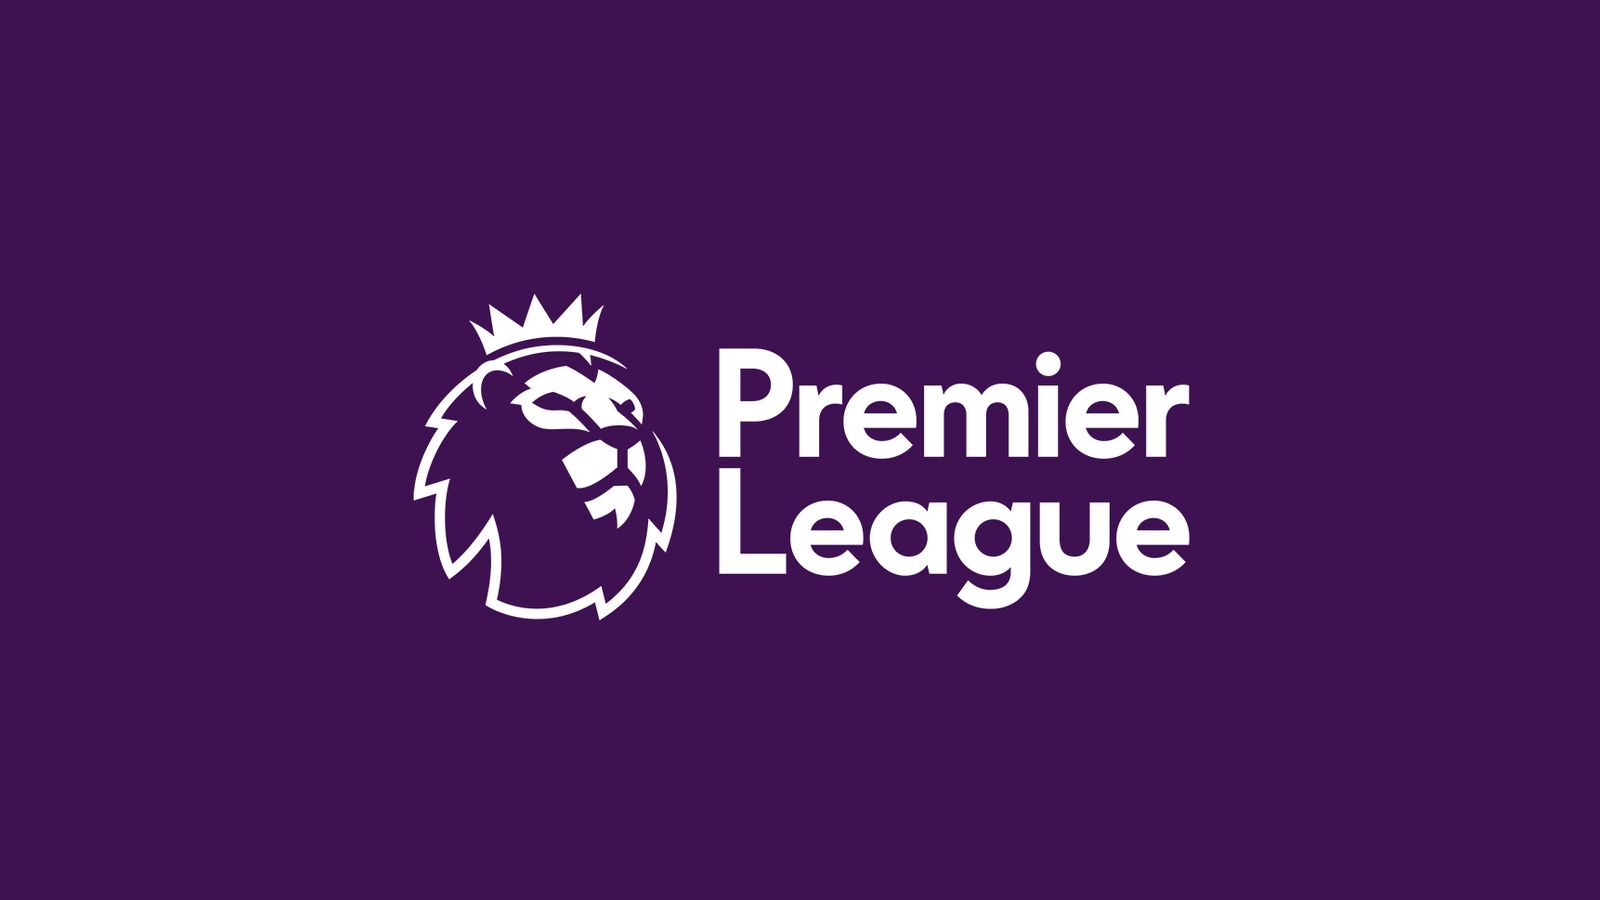 Премьер лига апл 2023. Английская премьер лига. Английская премьер лига логотип. Английская премьер лига 2023. АПЛ логотип футбол.